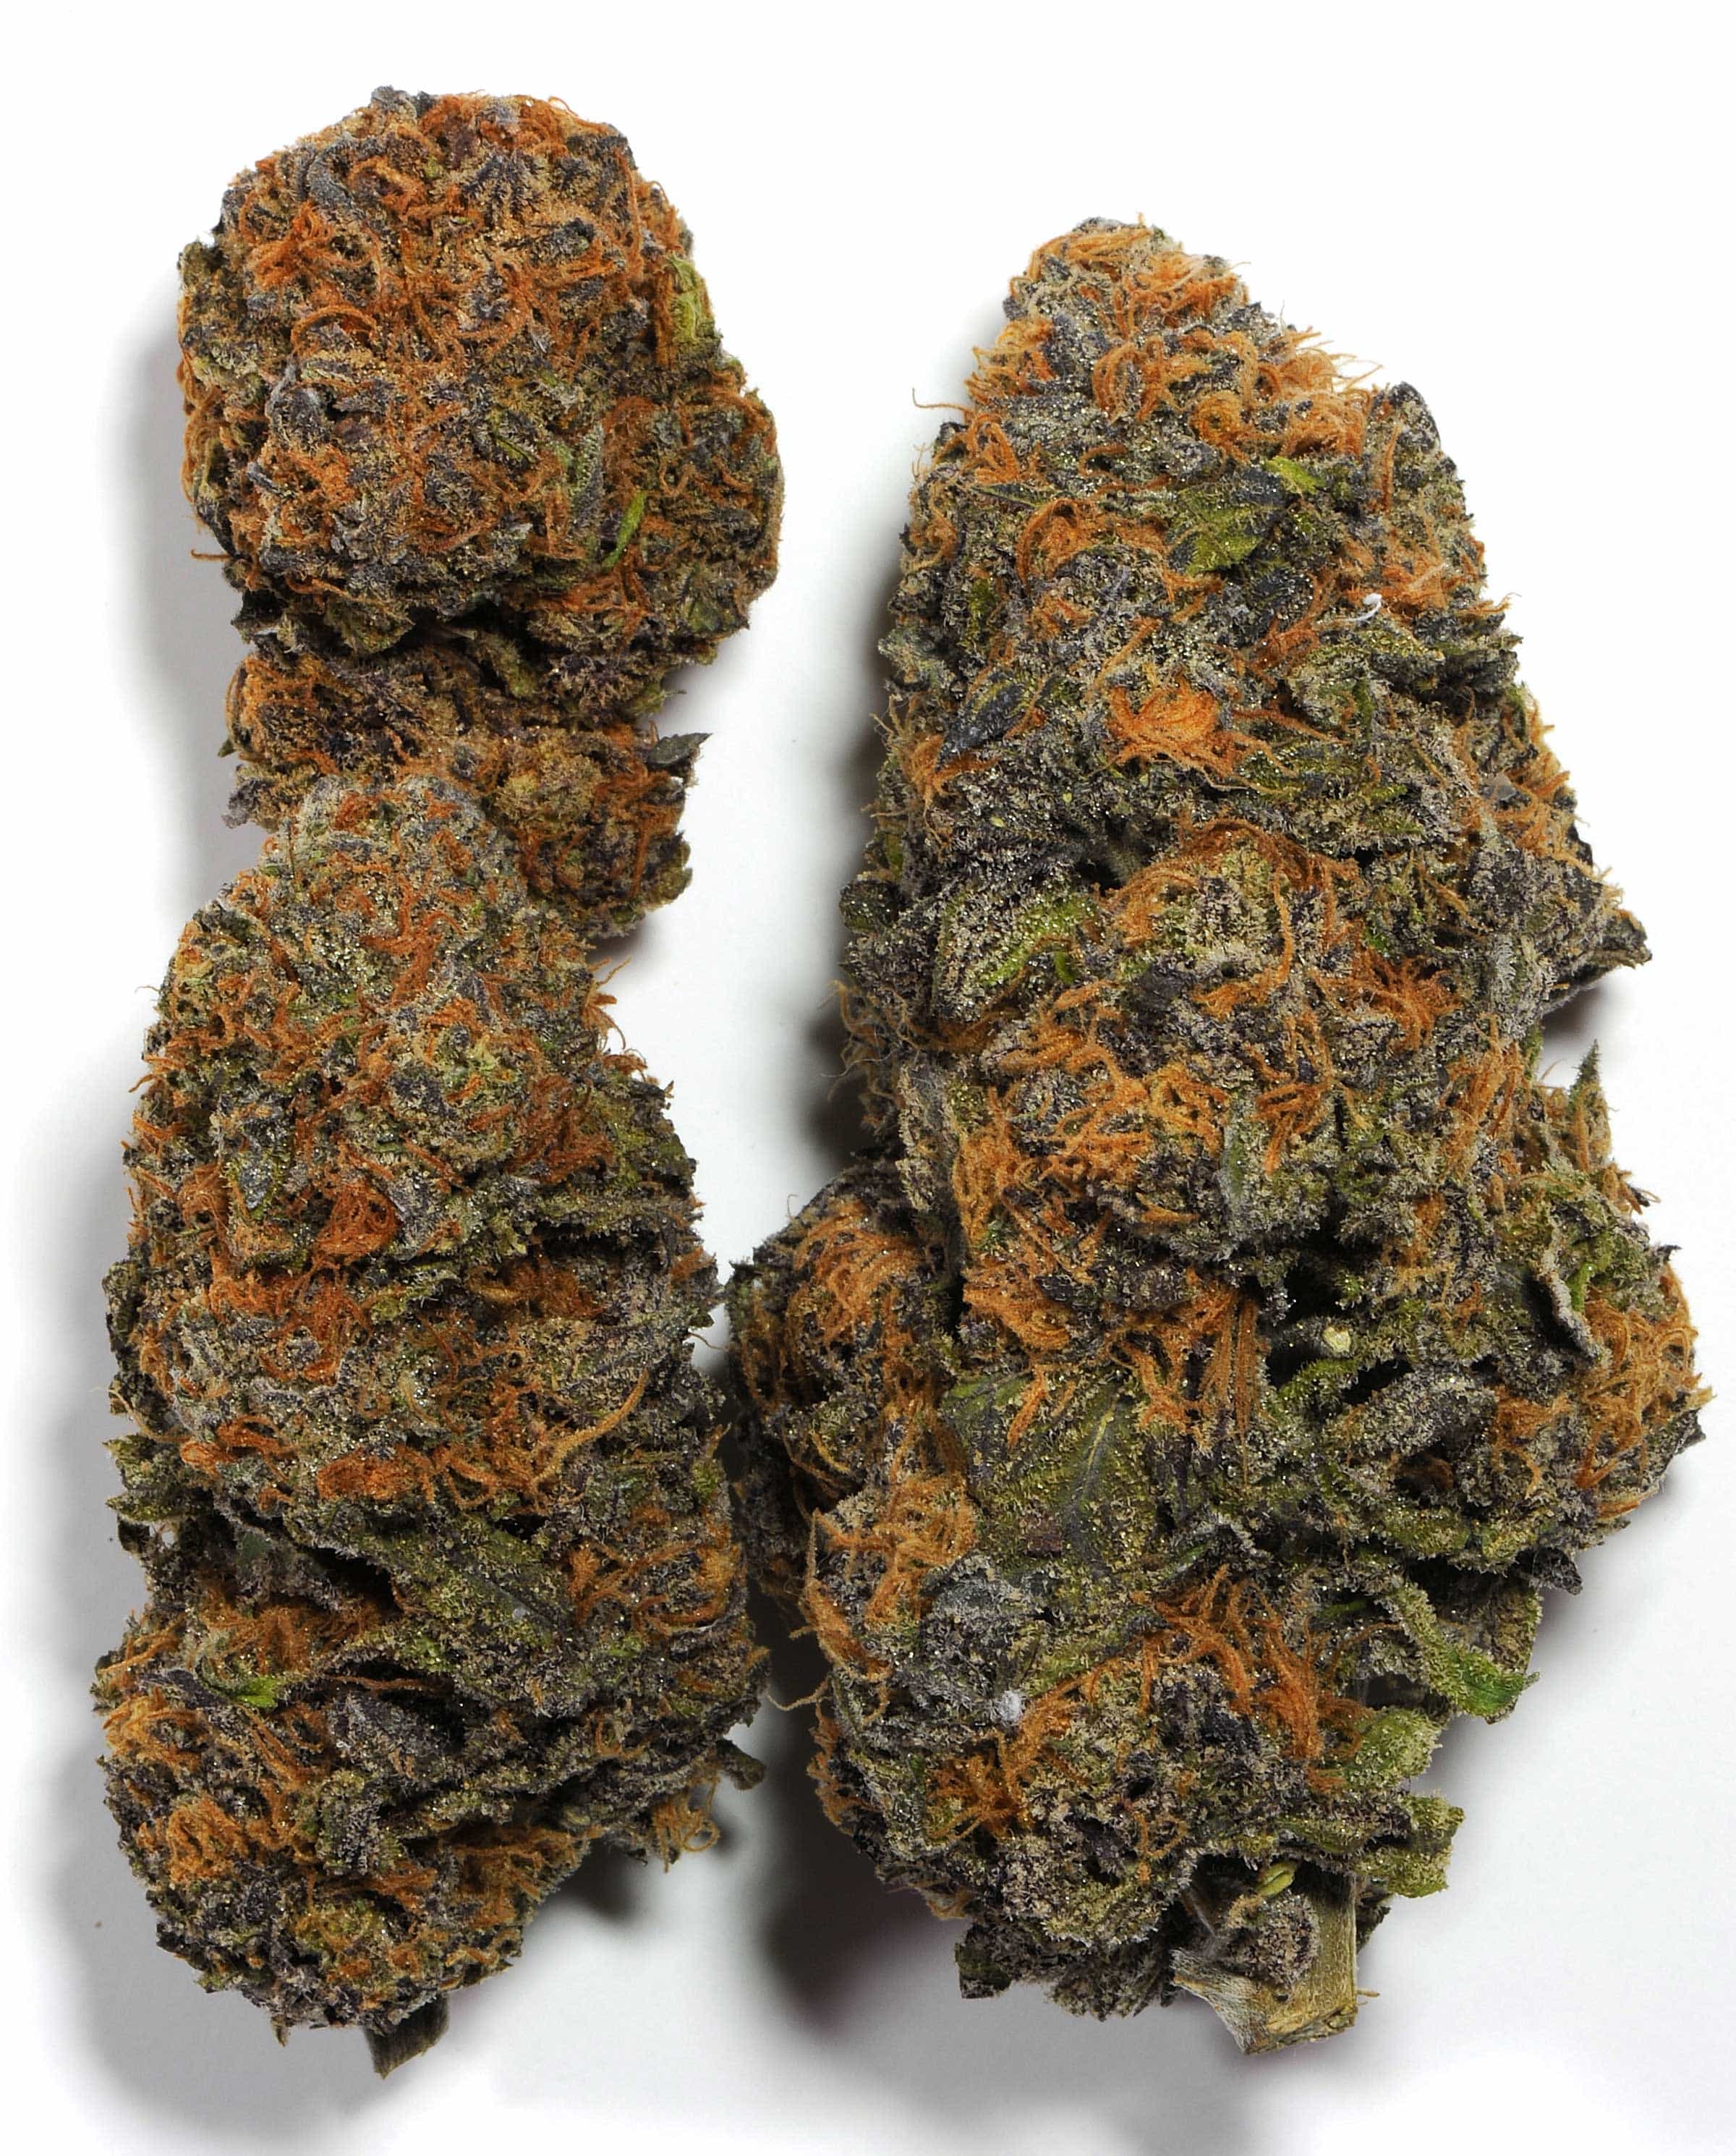 Grandaddy Purple is a strain known to produce heavy, chunky nugs.